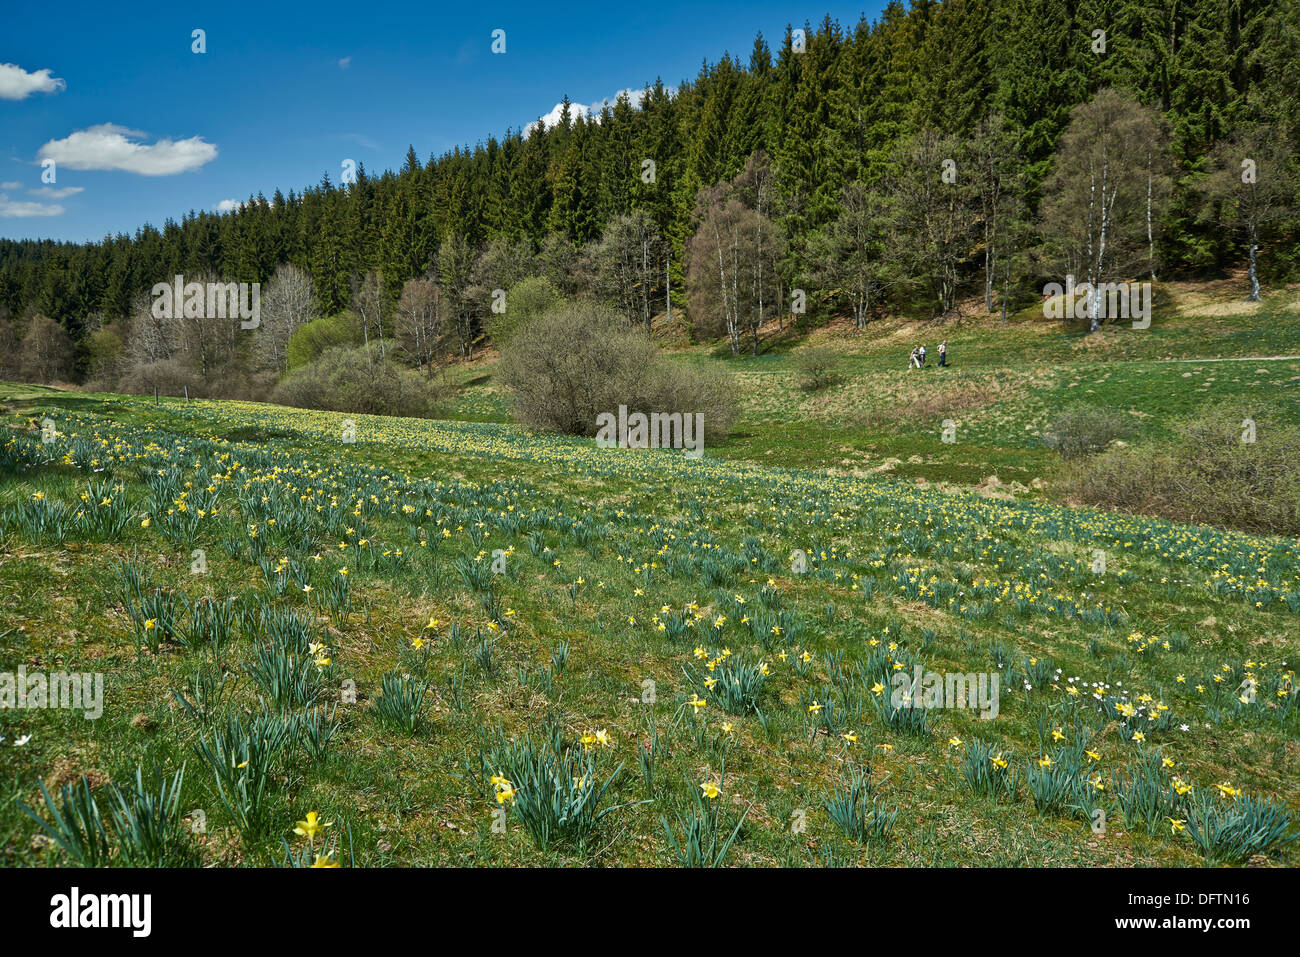 Wild giallo o Narciso narcisi (Narcissus pseudonarcissus), Perlenbachtal, Parco Nazionale Eifel, Monschau-Hoefen, Germania Foto Stock